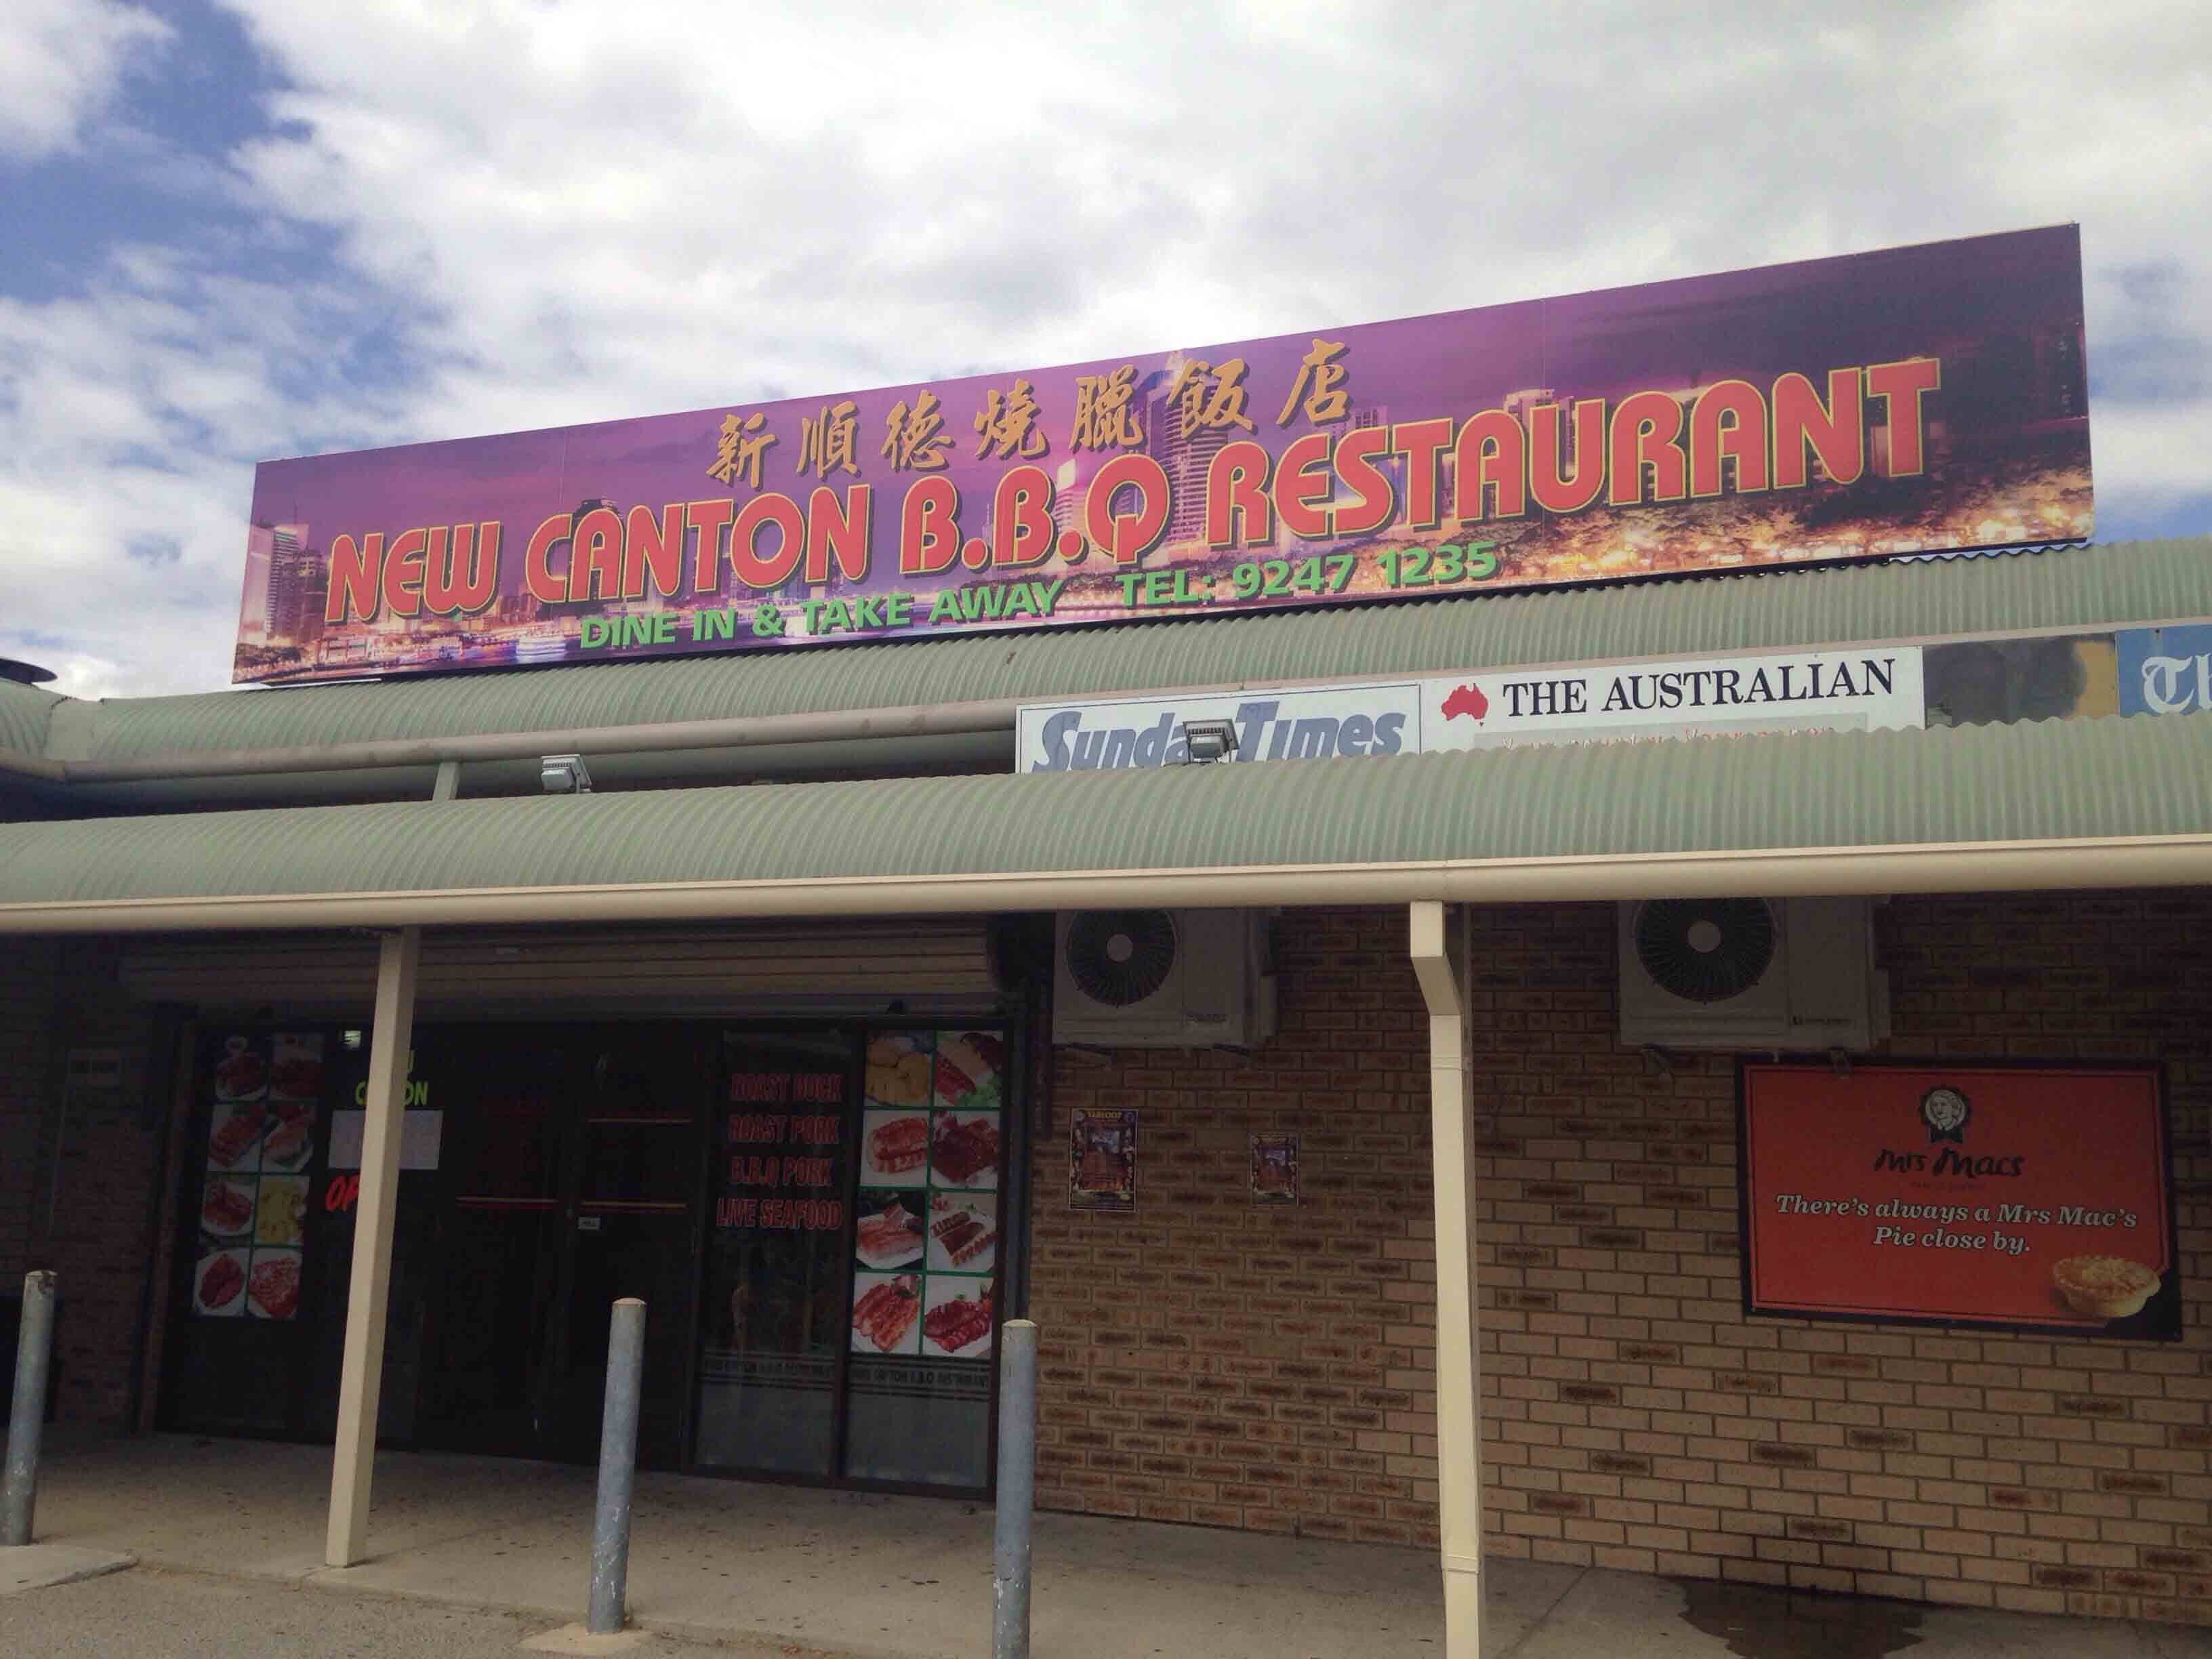 New Canton BBQ Restaurant, Marangaroo, Perth - Urbanspoon/Zomato